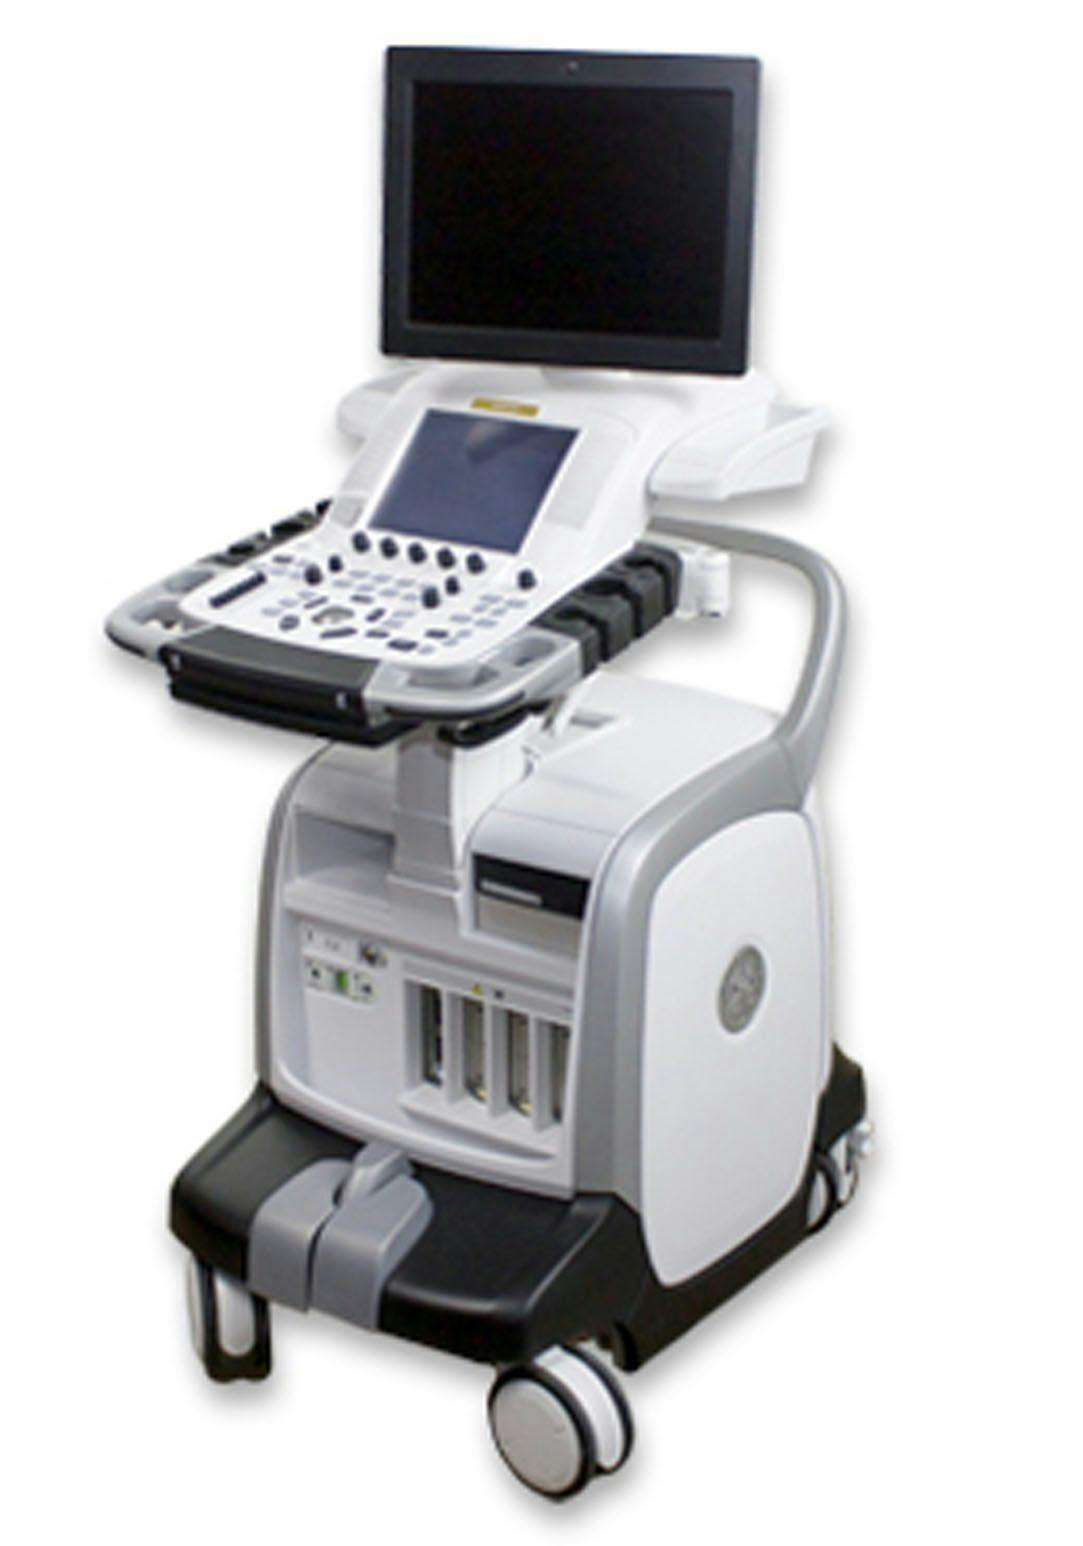 Effect of Scanner-based Protocol-driven Ultrasound